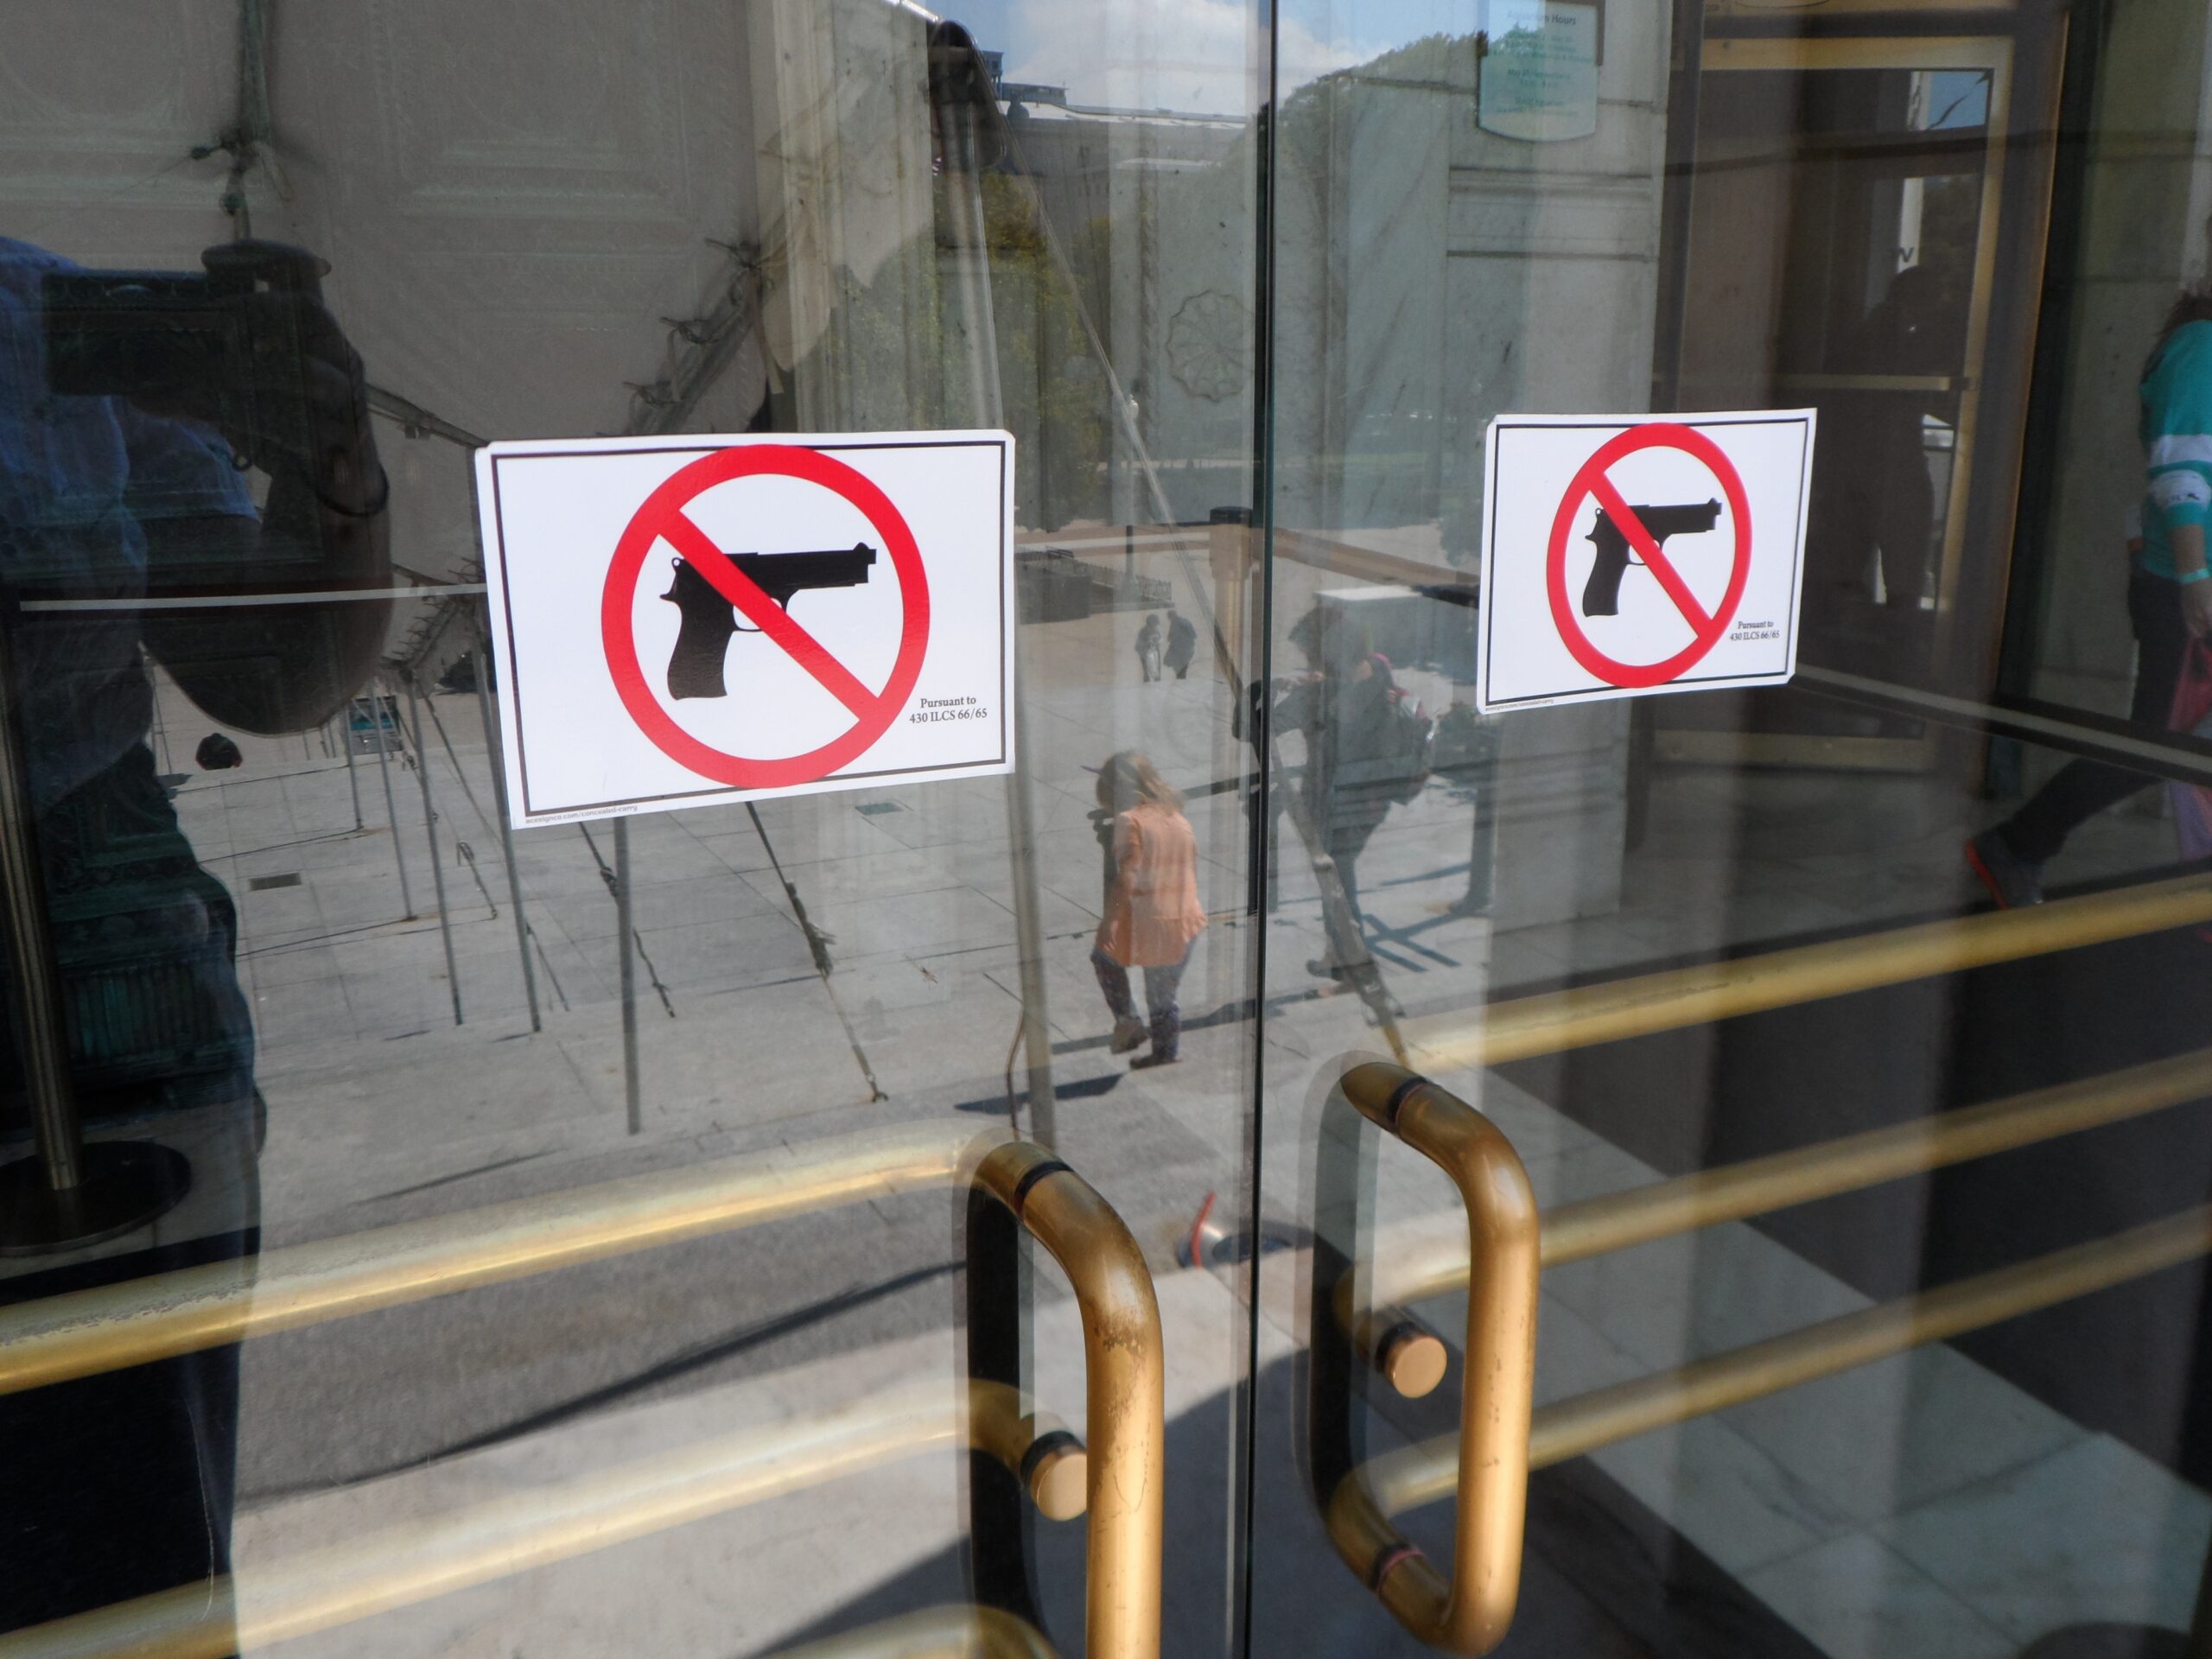 "No guns" sign